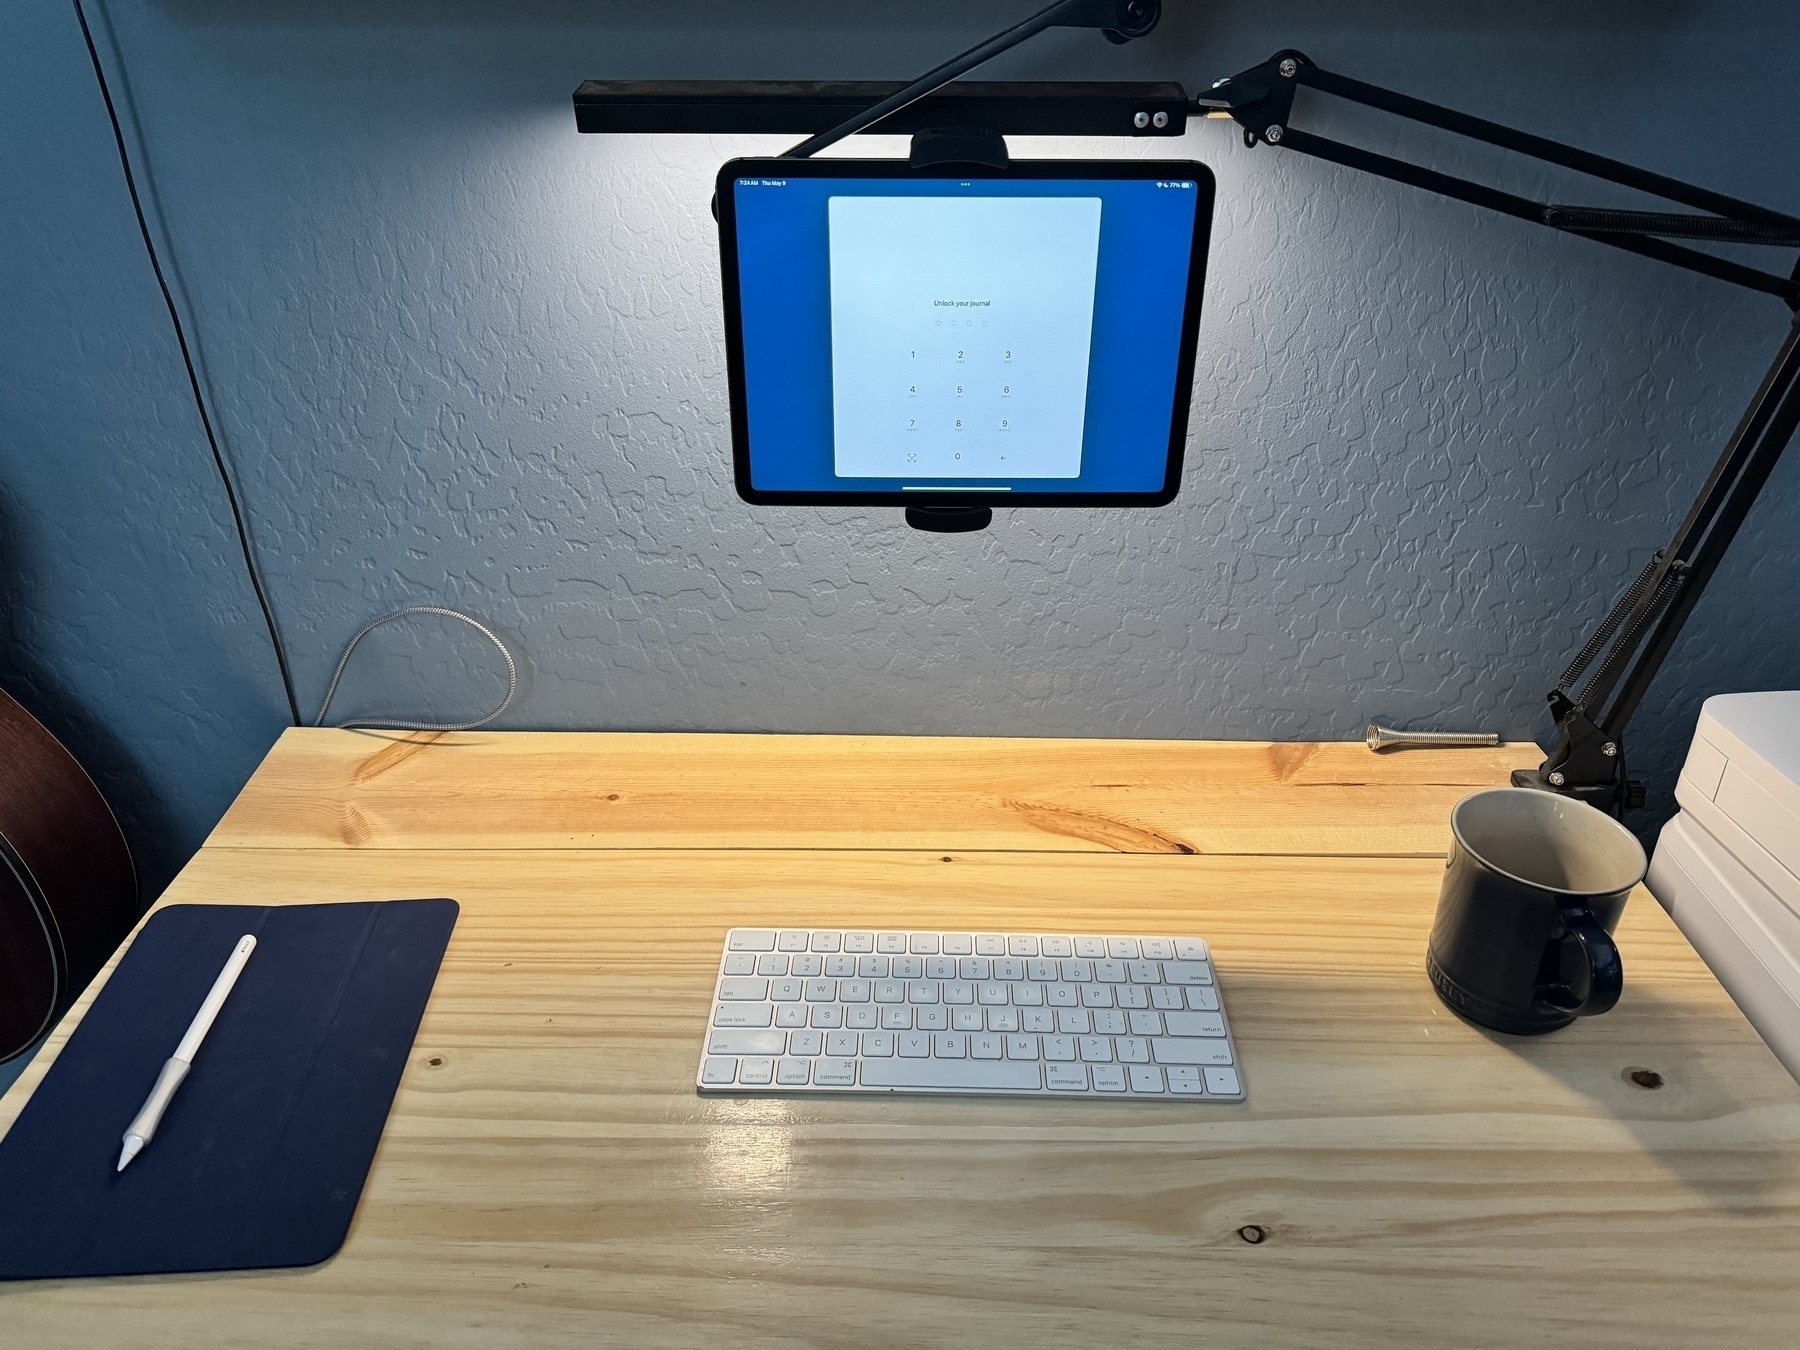 iPad and keyboard writing setup